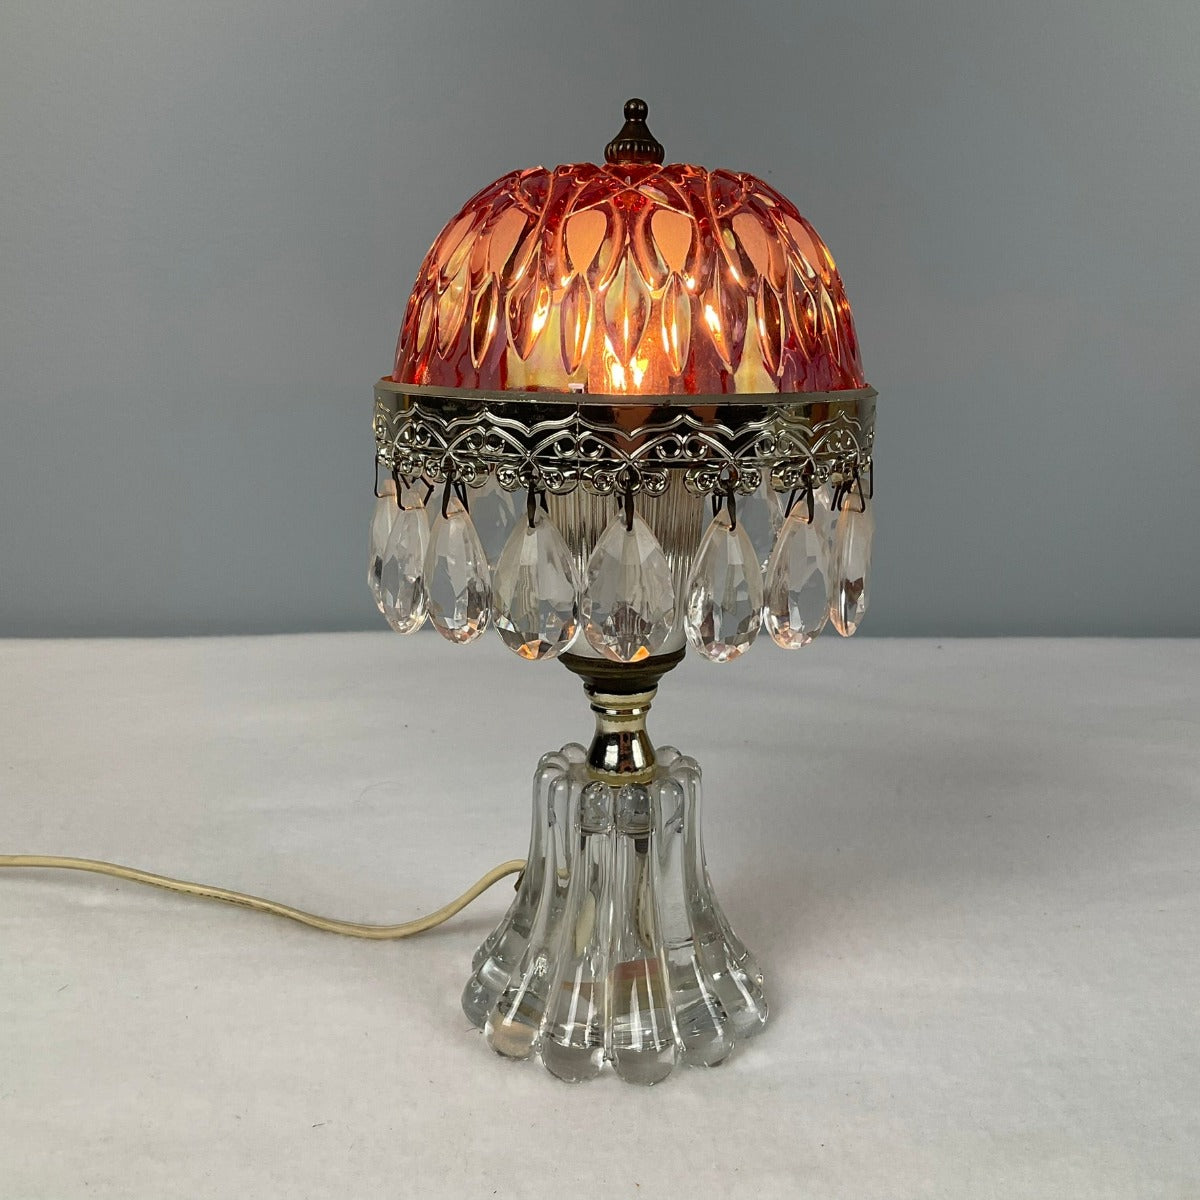 Michelotti Boudoir Lamp - Vintage Single Tier Pink Crystal Glass - Turned On